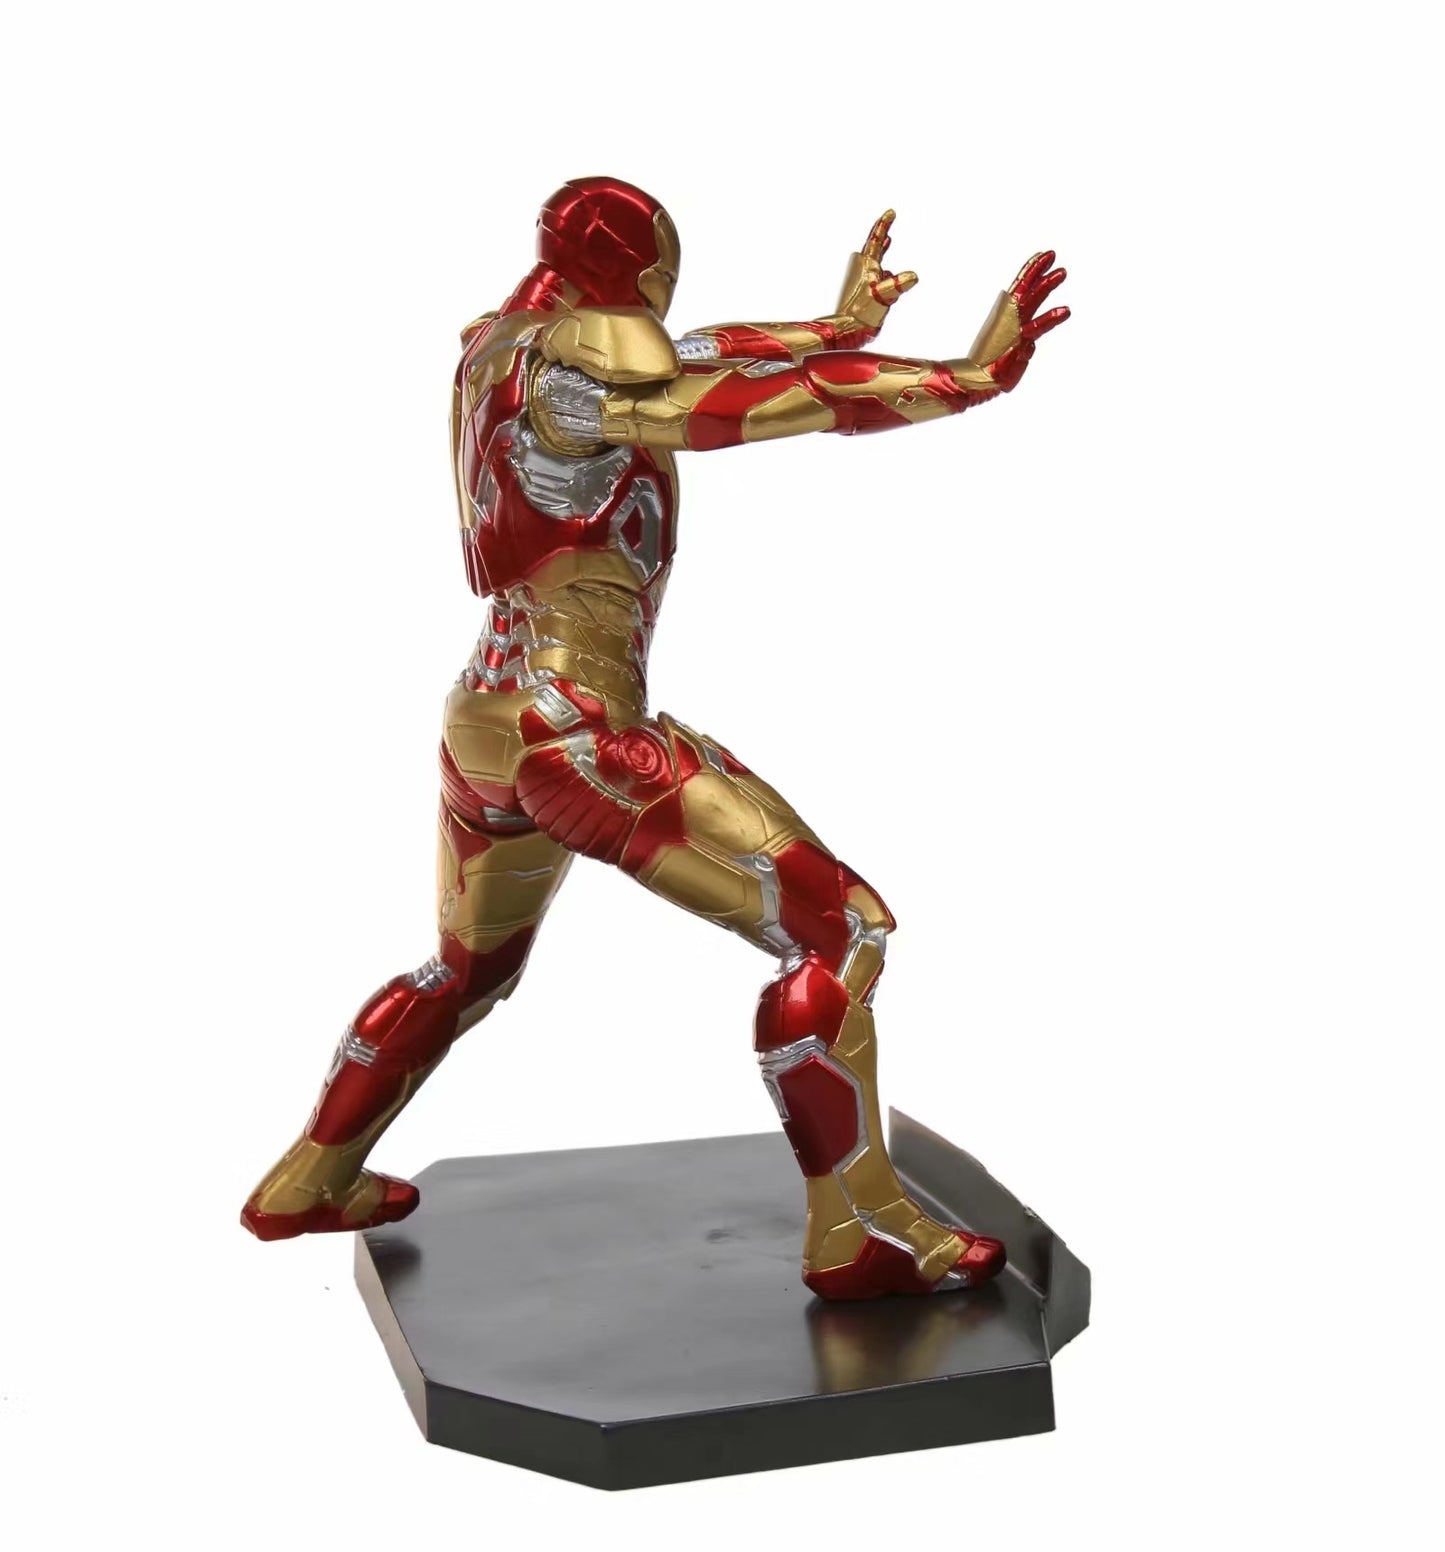 Brazil Factory 1/10 Iron Man Statue 3 Mk42 Boxed Anime Ornaments